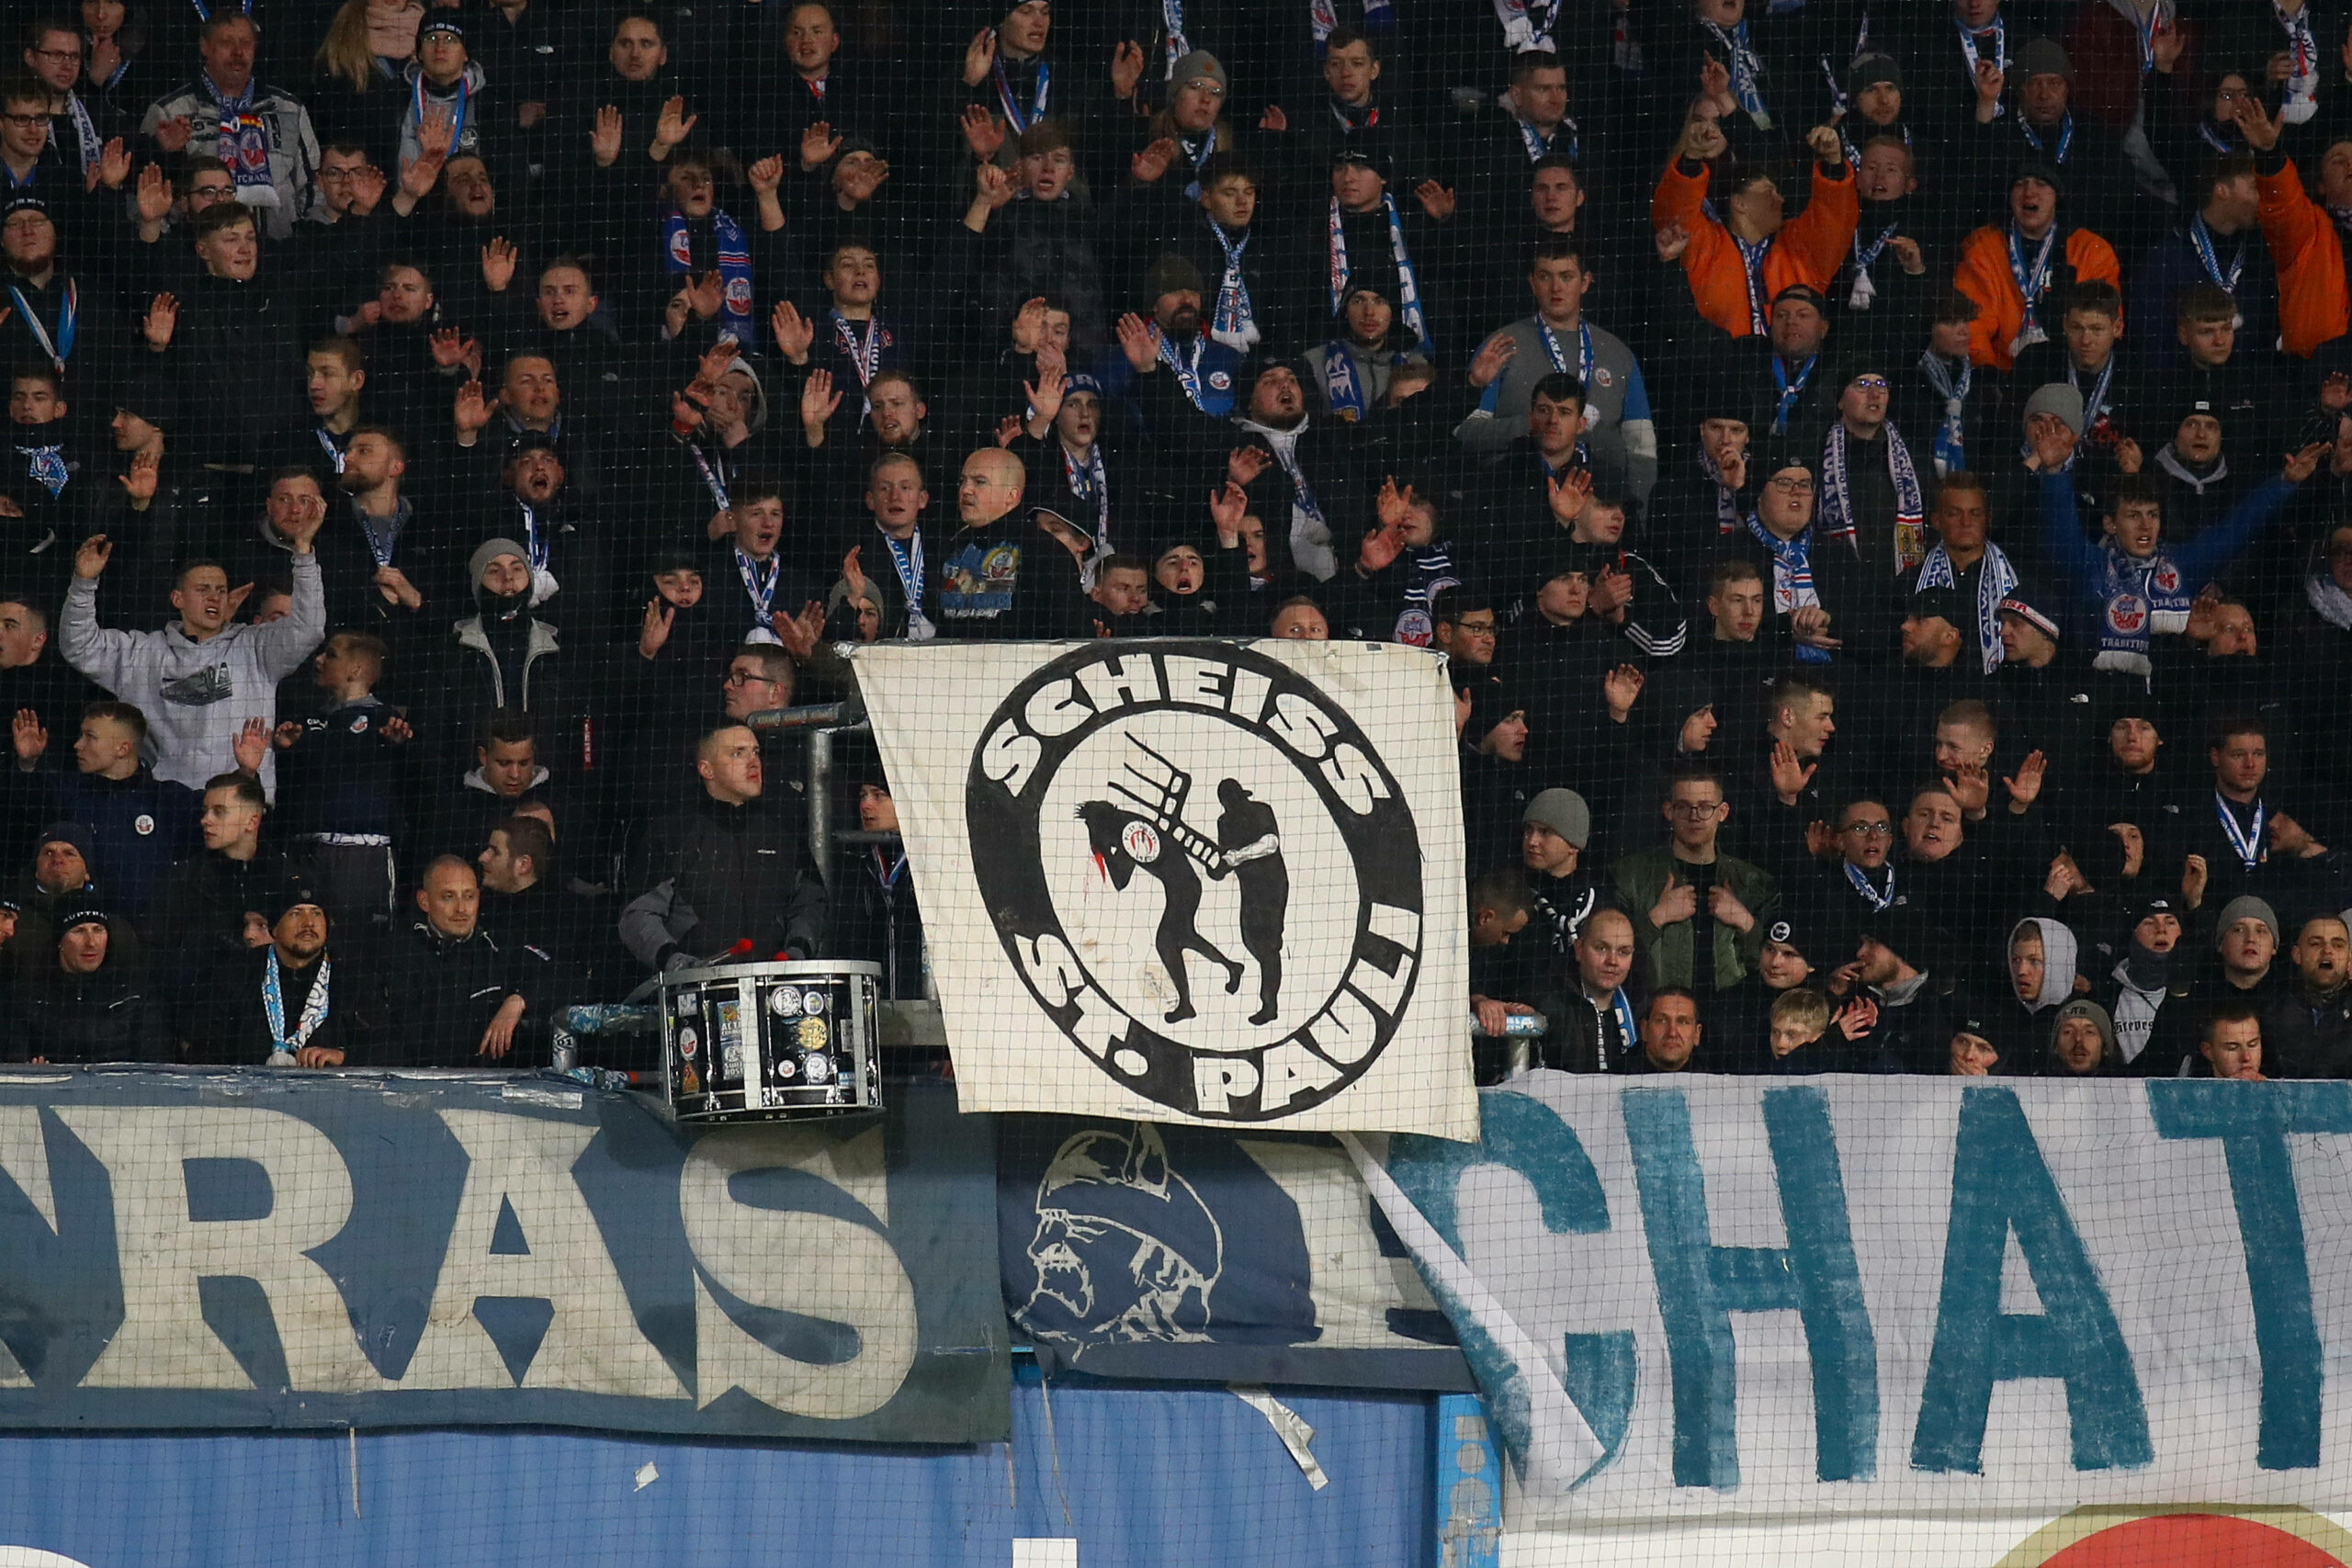 Rostock-Fans mit Anti-St. Pauli-Banner